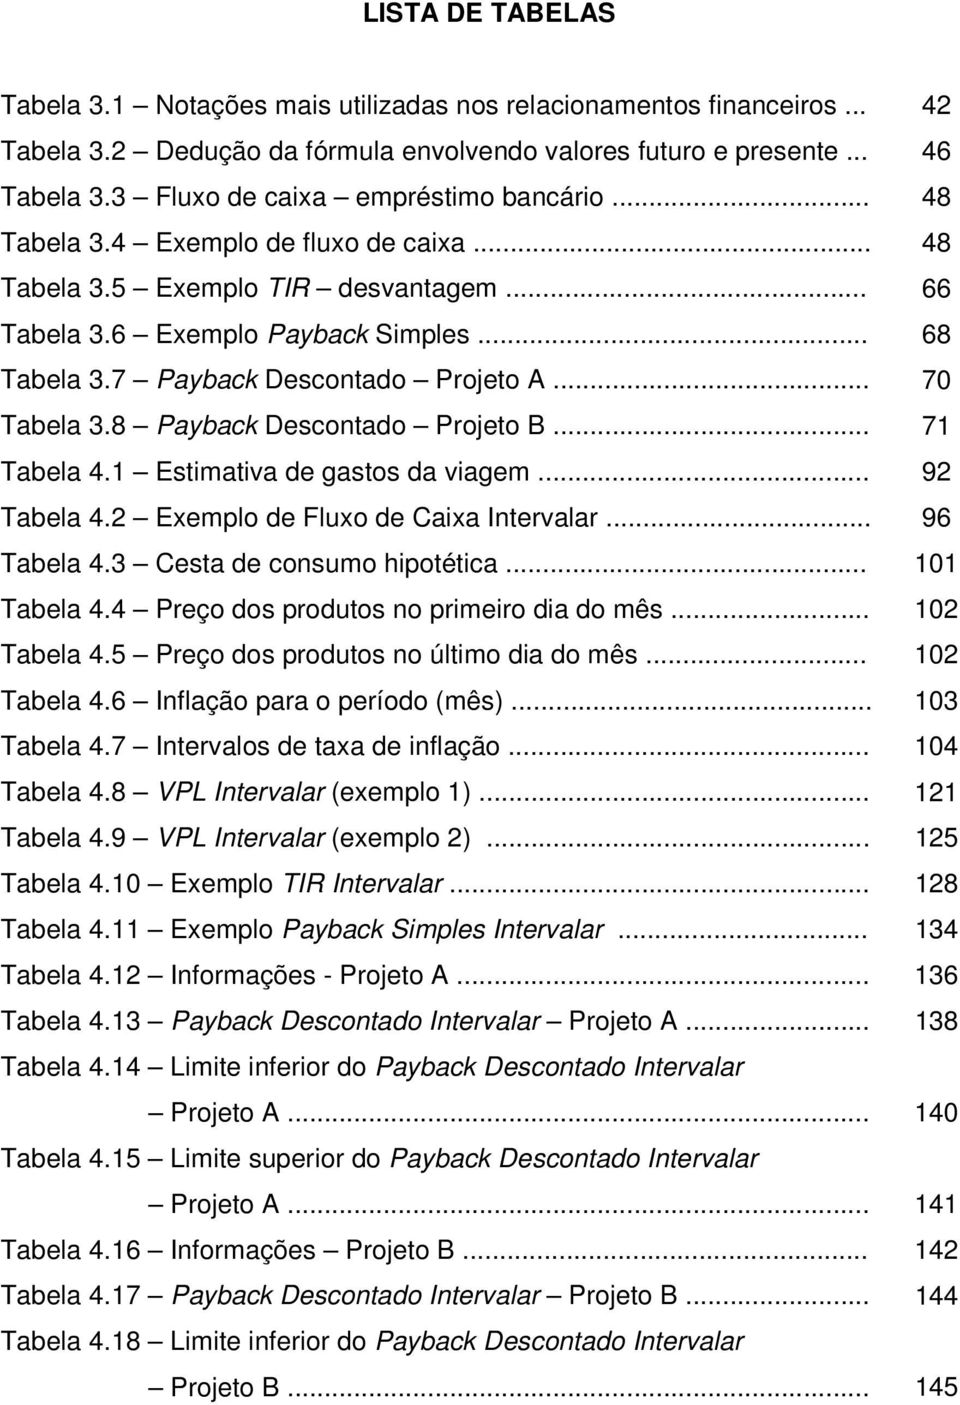 8 Payback Descotado Projeto B... 7 Tabela 4. Estimativa de gastos da viagem... 9 Tabela 4. Exemplo de Fluxo de Caixa Itervalar... 96 Tabela 4.3 Cesta de cosumo hipotética... 0 Tabela 4.